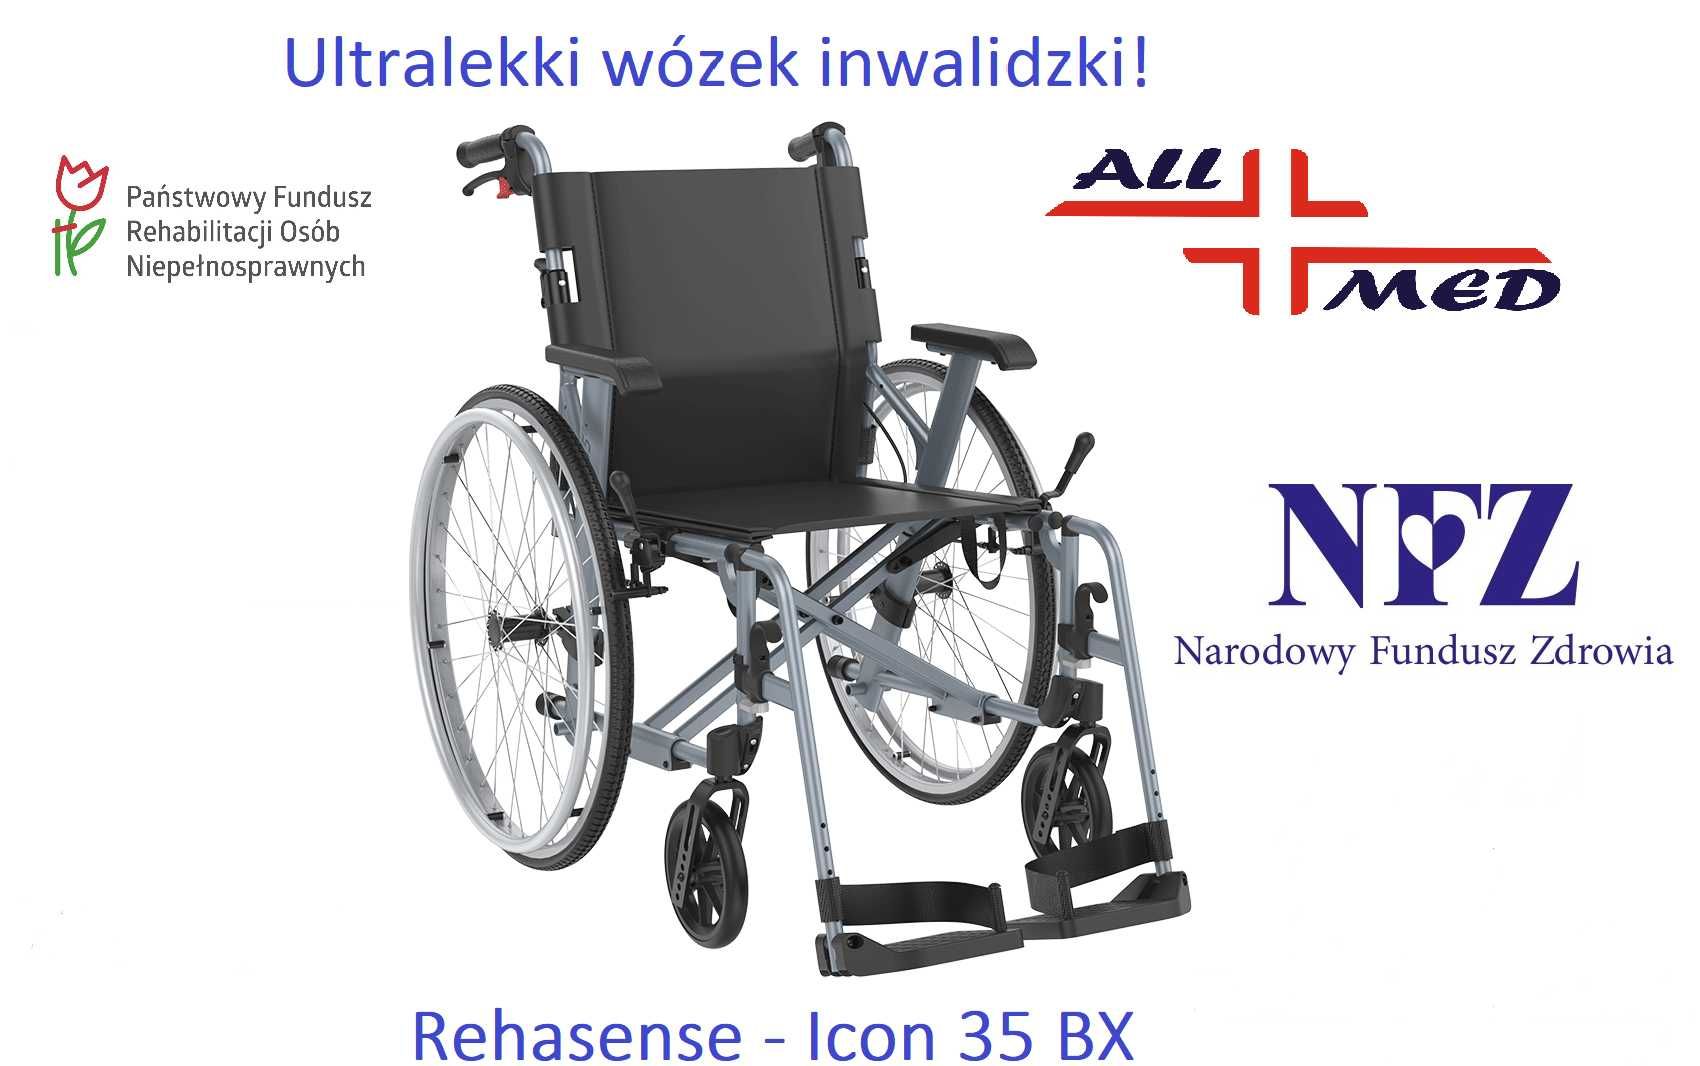 Wózek inwalidzki Rehasense Icon 35 BX, NFZ.